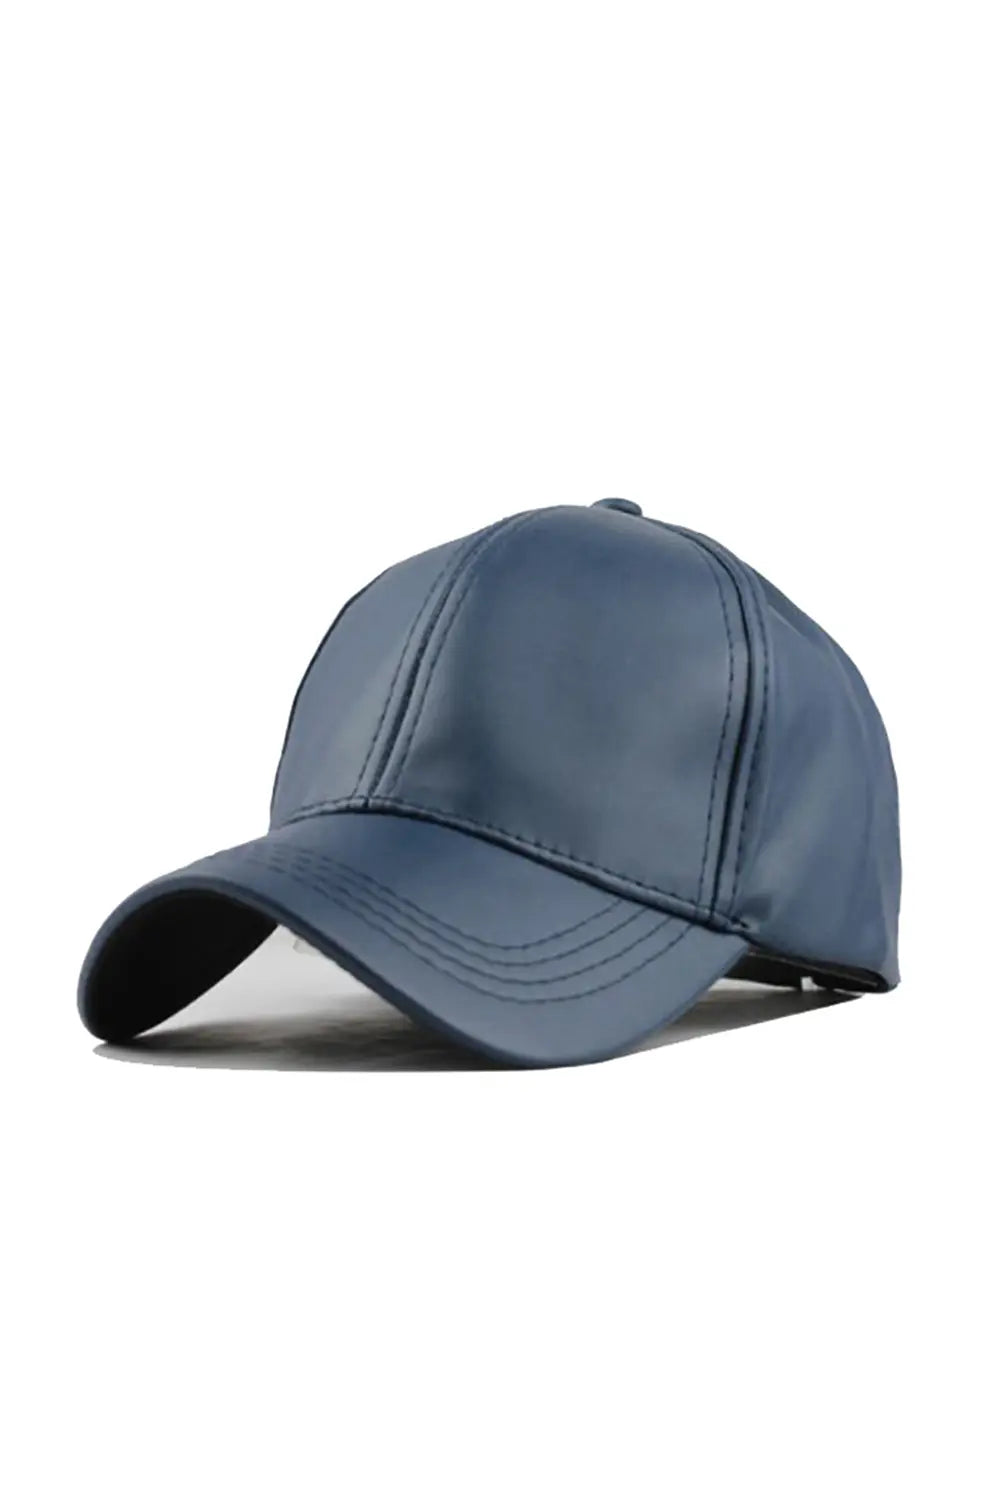 Leather Baseball Cap - Navy Blue - Strange-Clothes